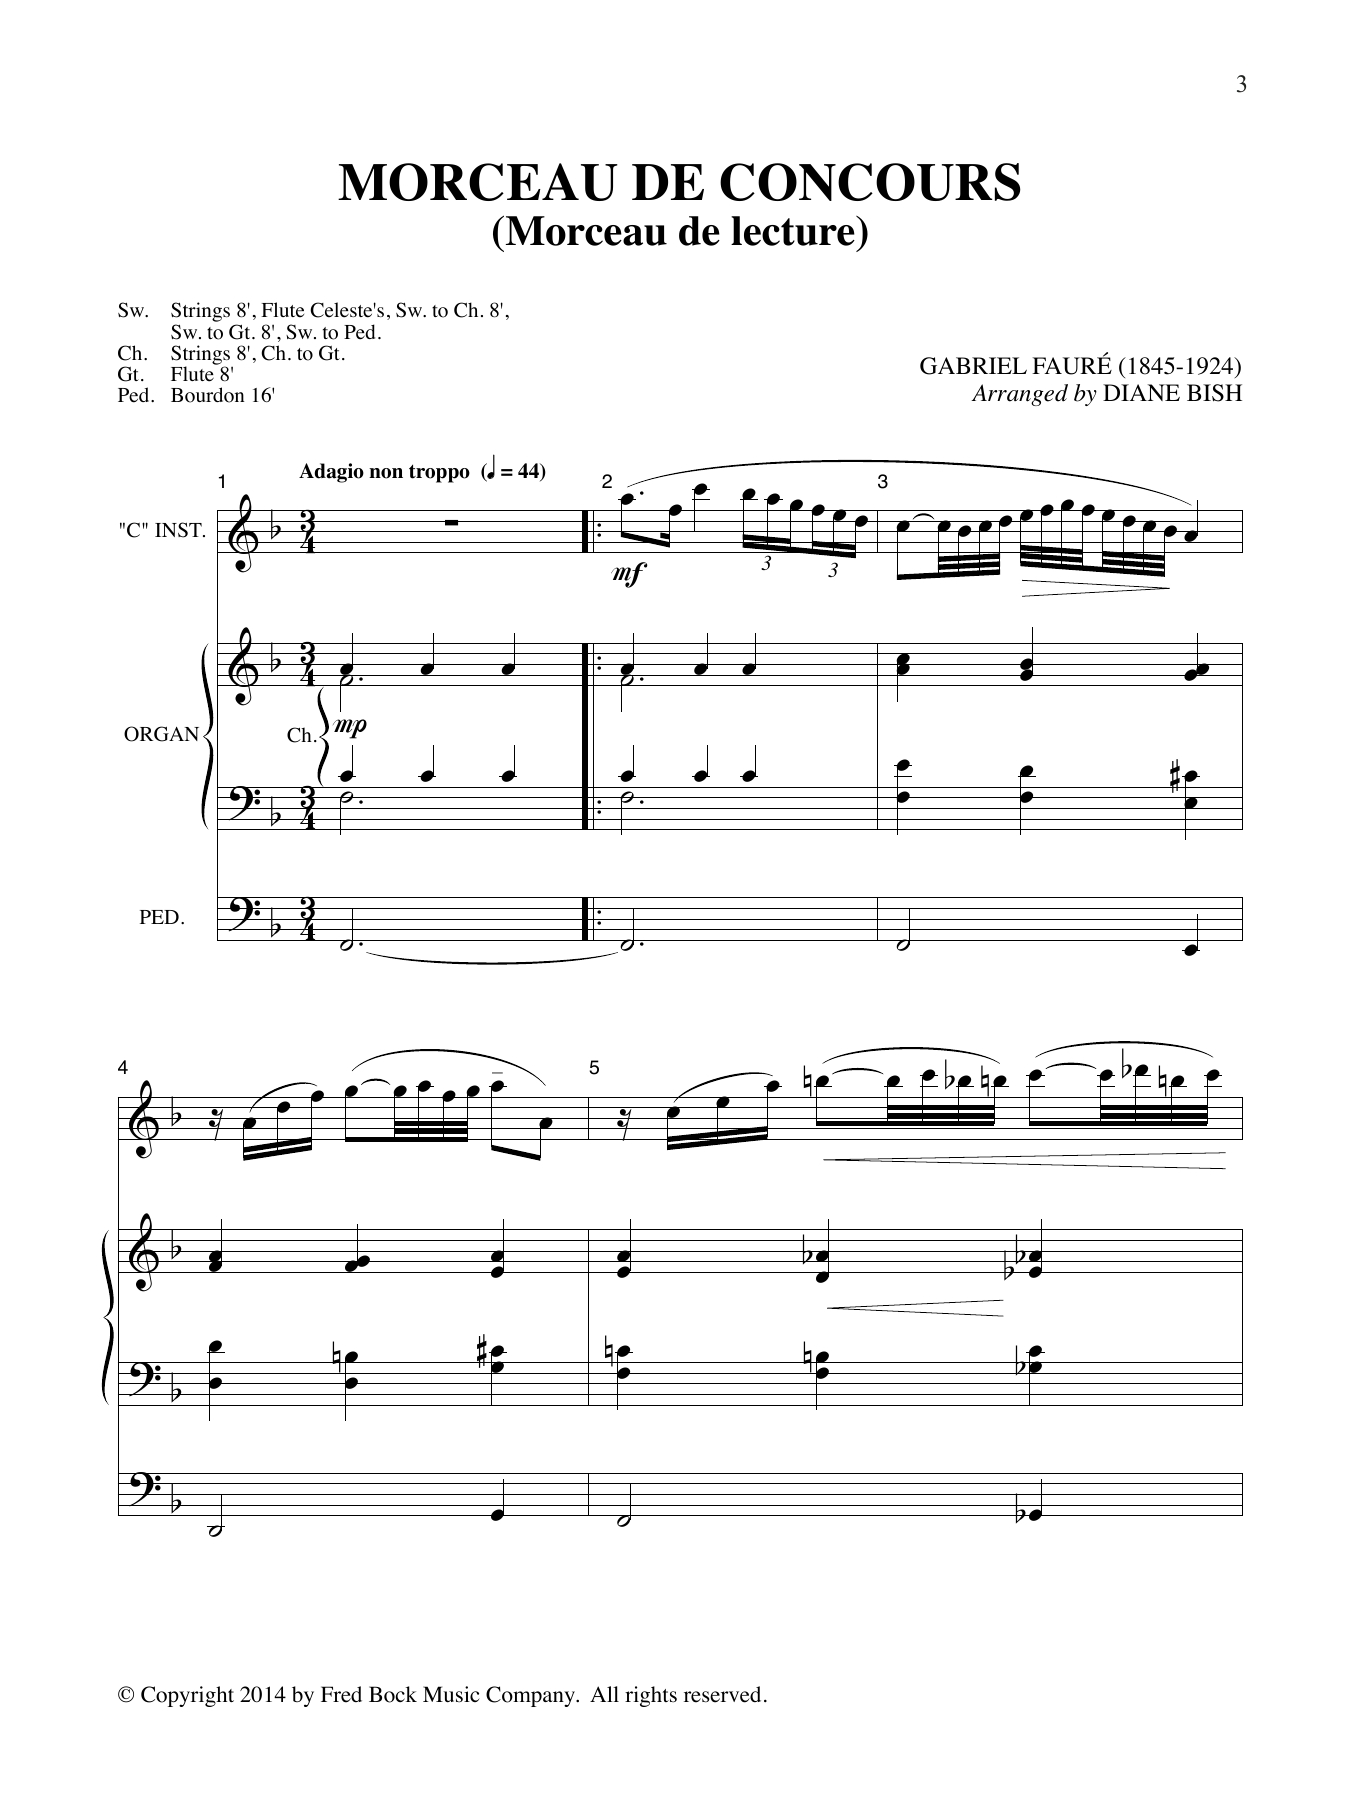 Gabriel Faure, Wolfgang Amadeus Mozart and Georg Phillip Telemann Meditations (arr. Diane Bish) Sheet Music Notes & Chords for Organ - Download or Print PDF